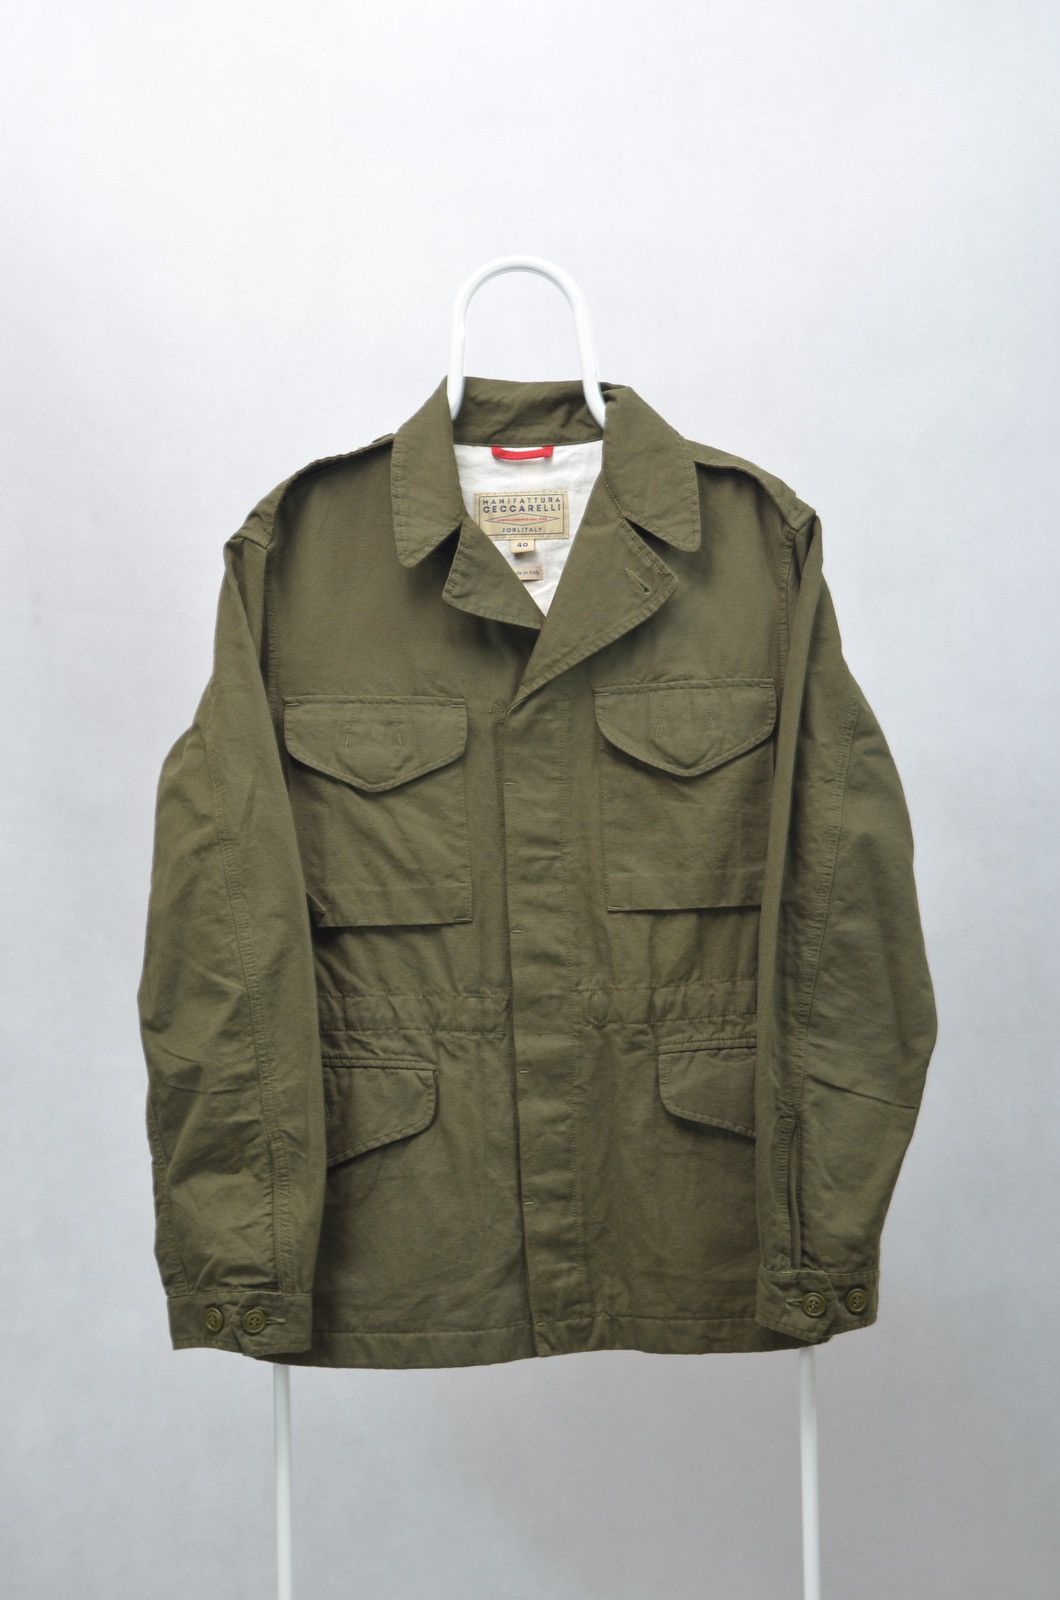 Heritage Manifattura Ceccarelli Field Jacket in Olive size M | Grailed